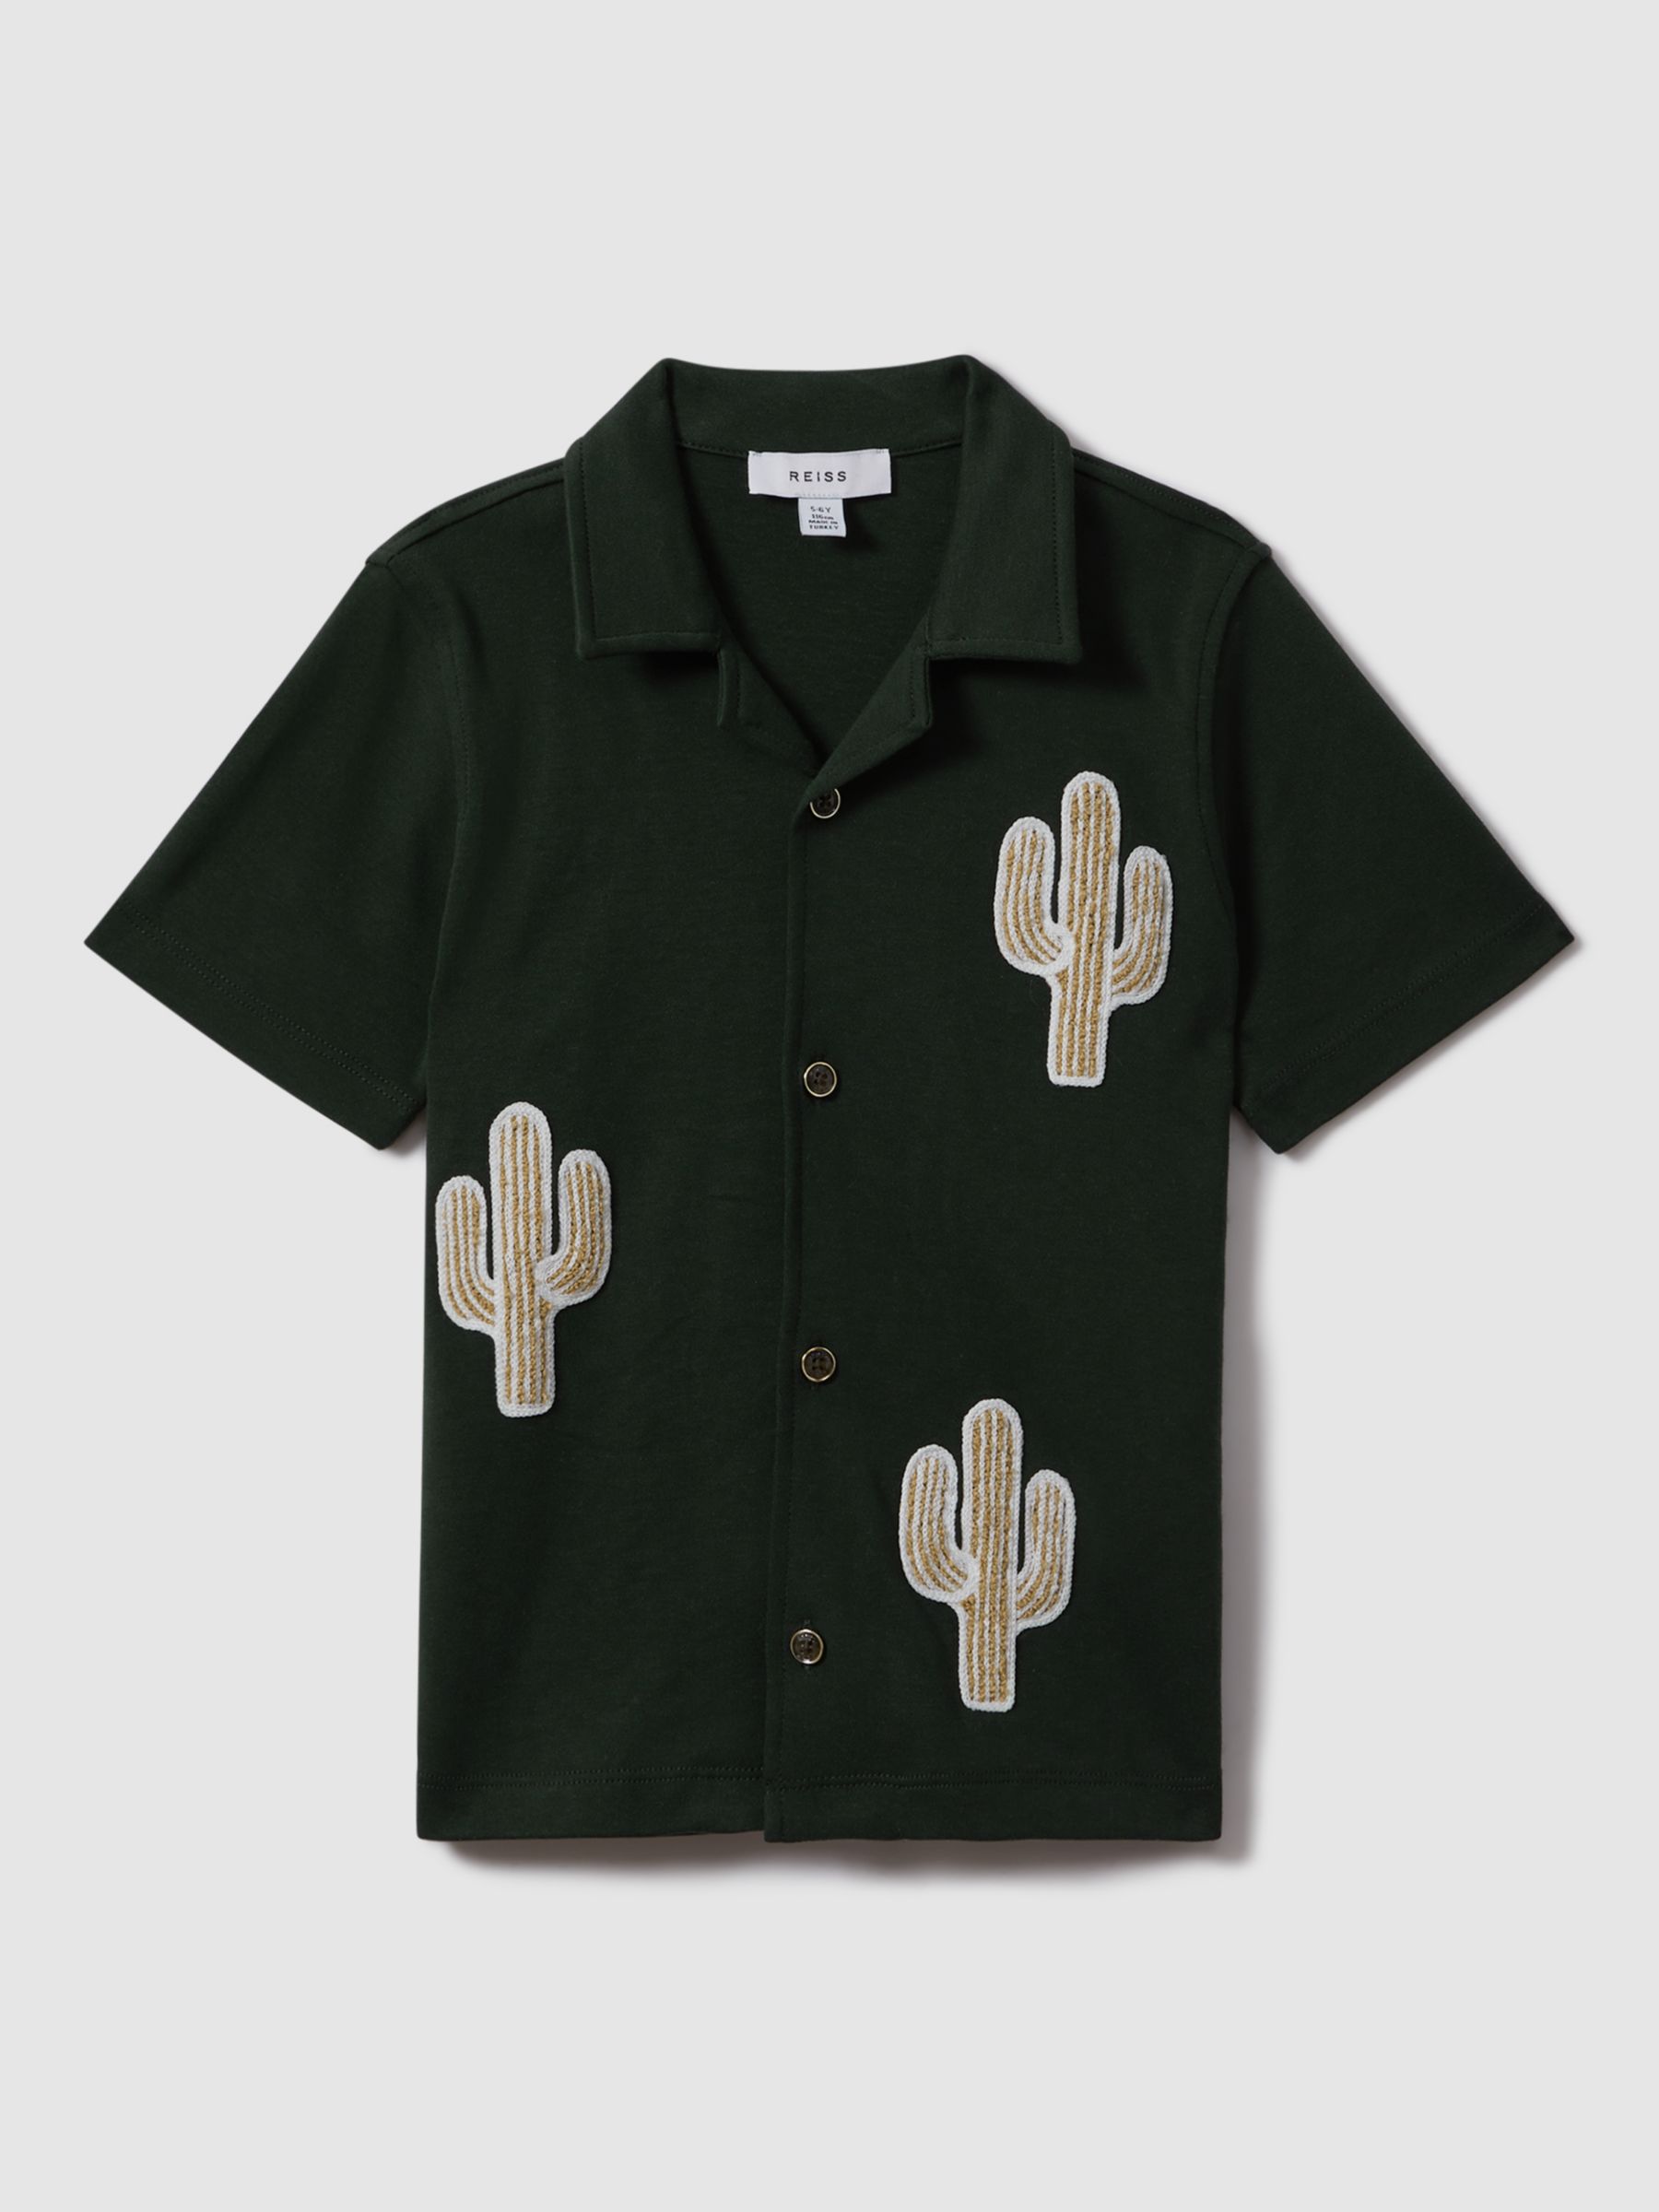 Reiss Stan Embroidered Cactus Cuban Shirt, Dark Green/Multi, 9-10 years